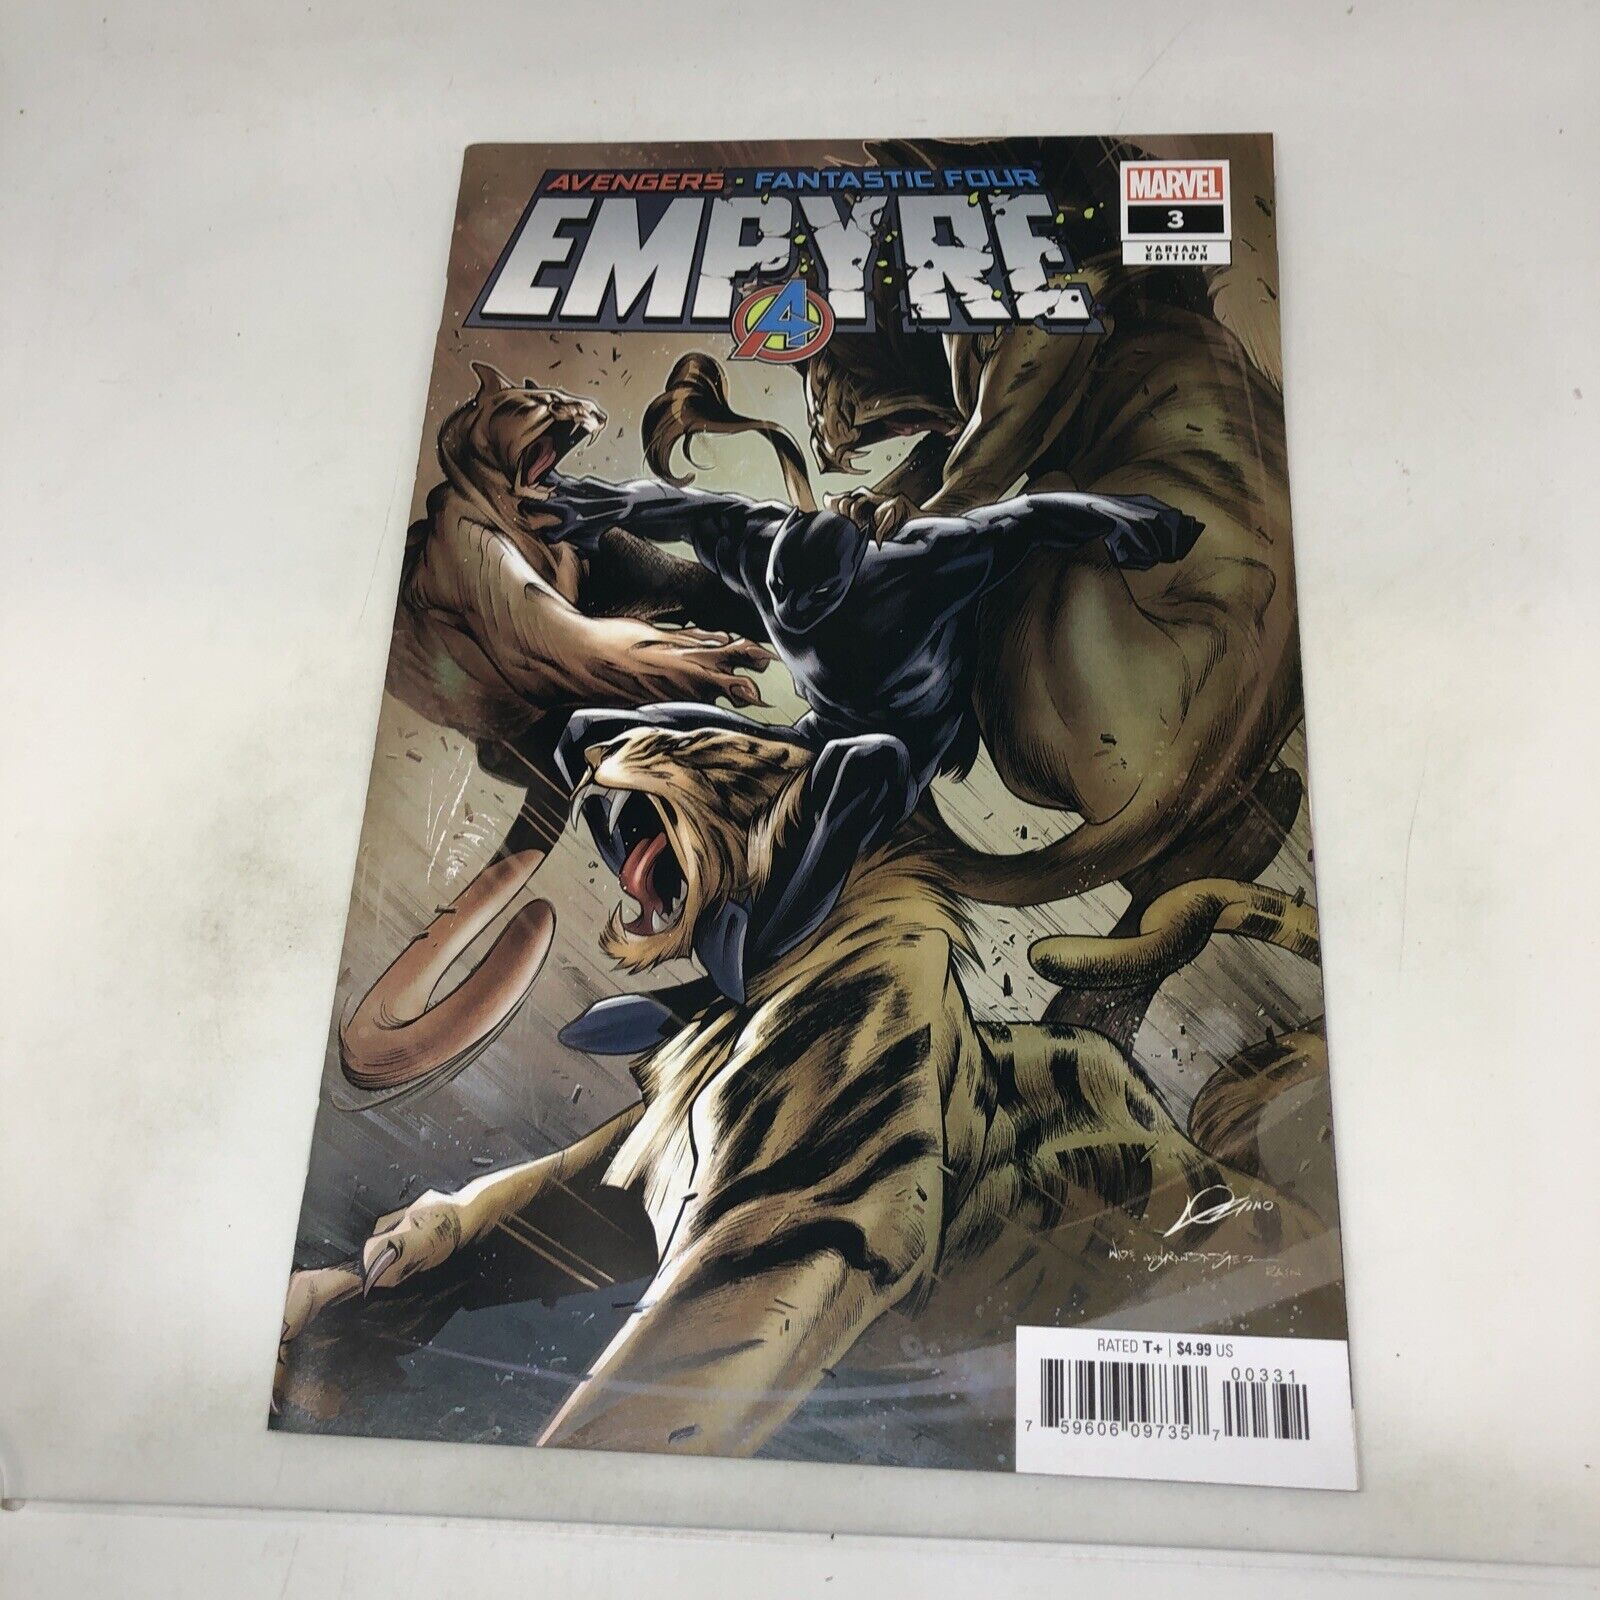 Marvel Avengers Fantastic Four Empyre #3